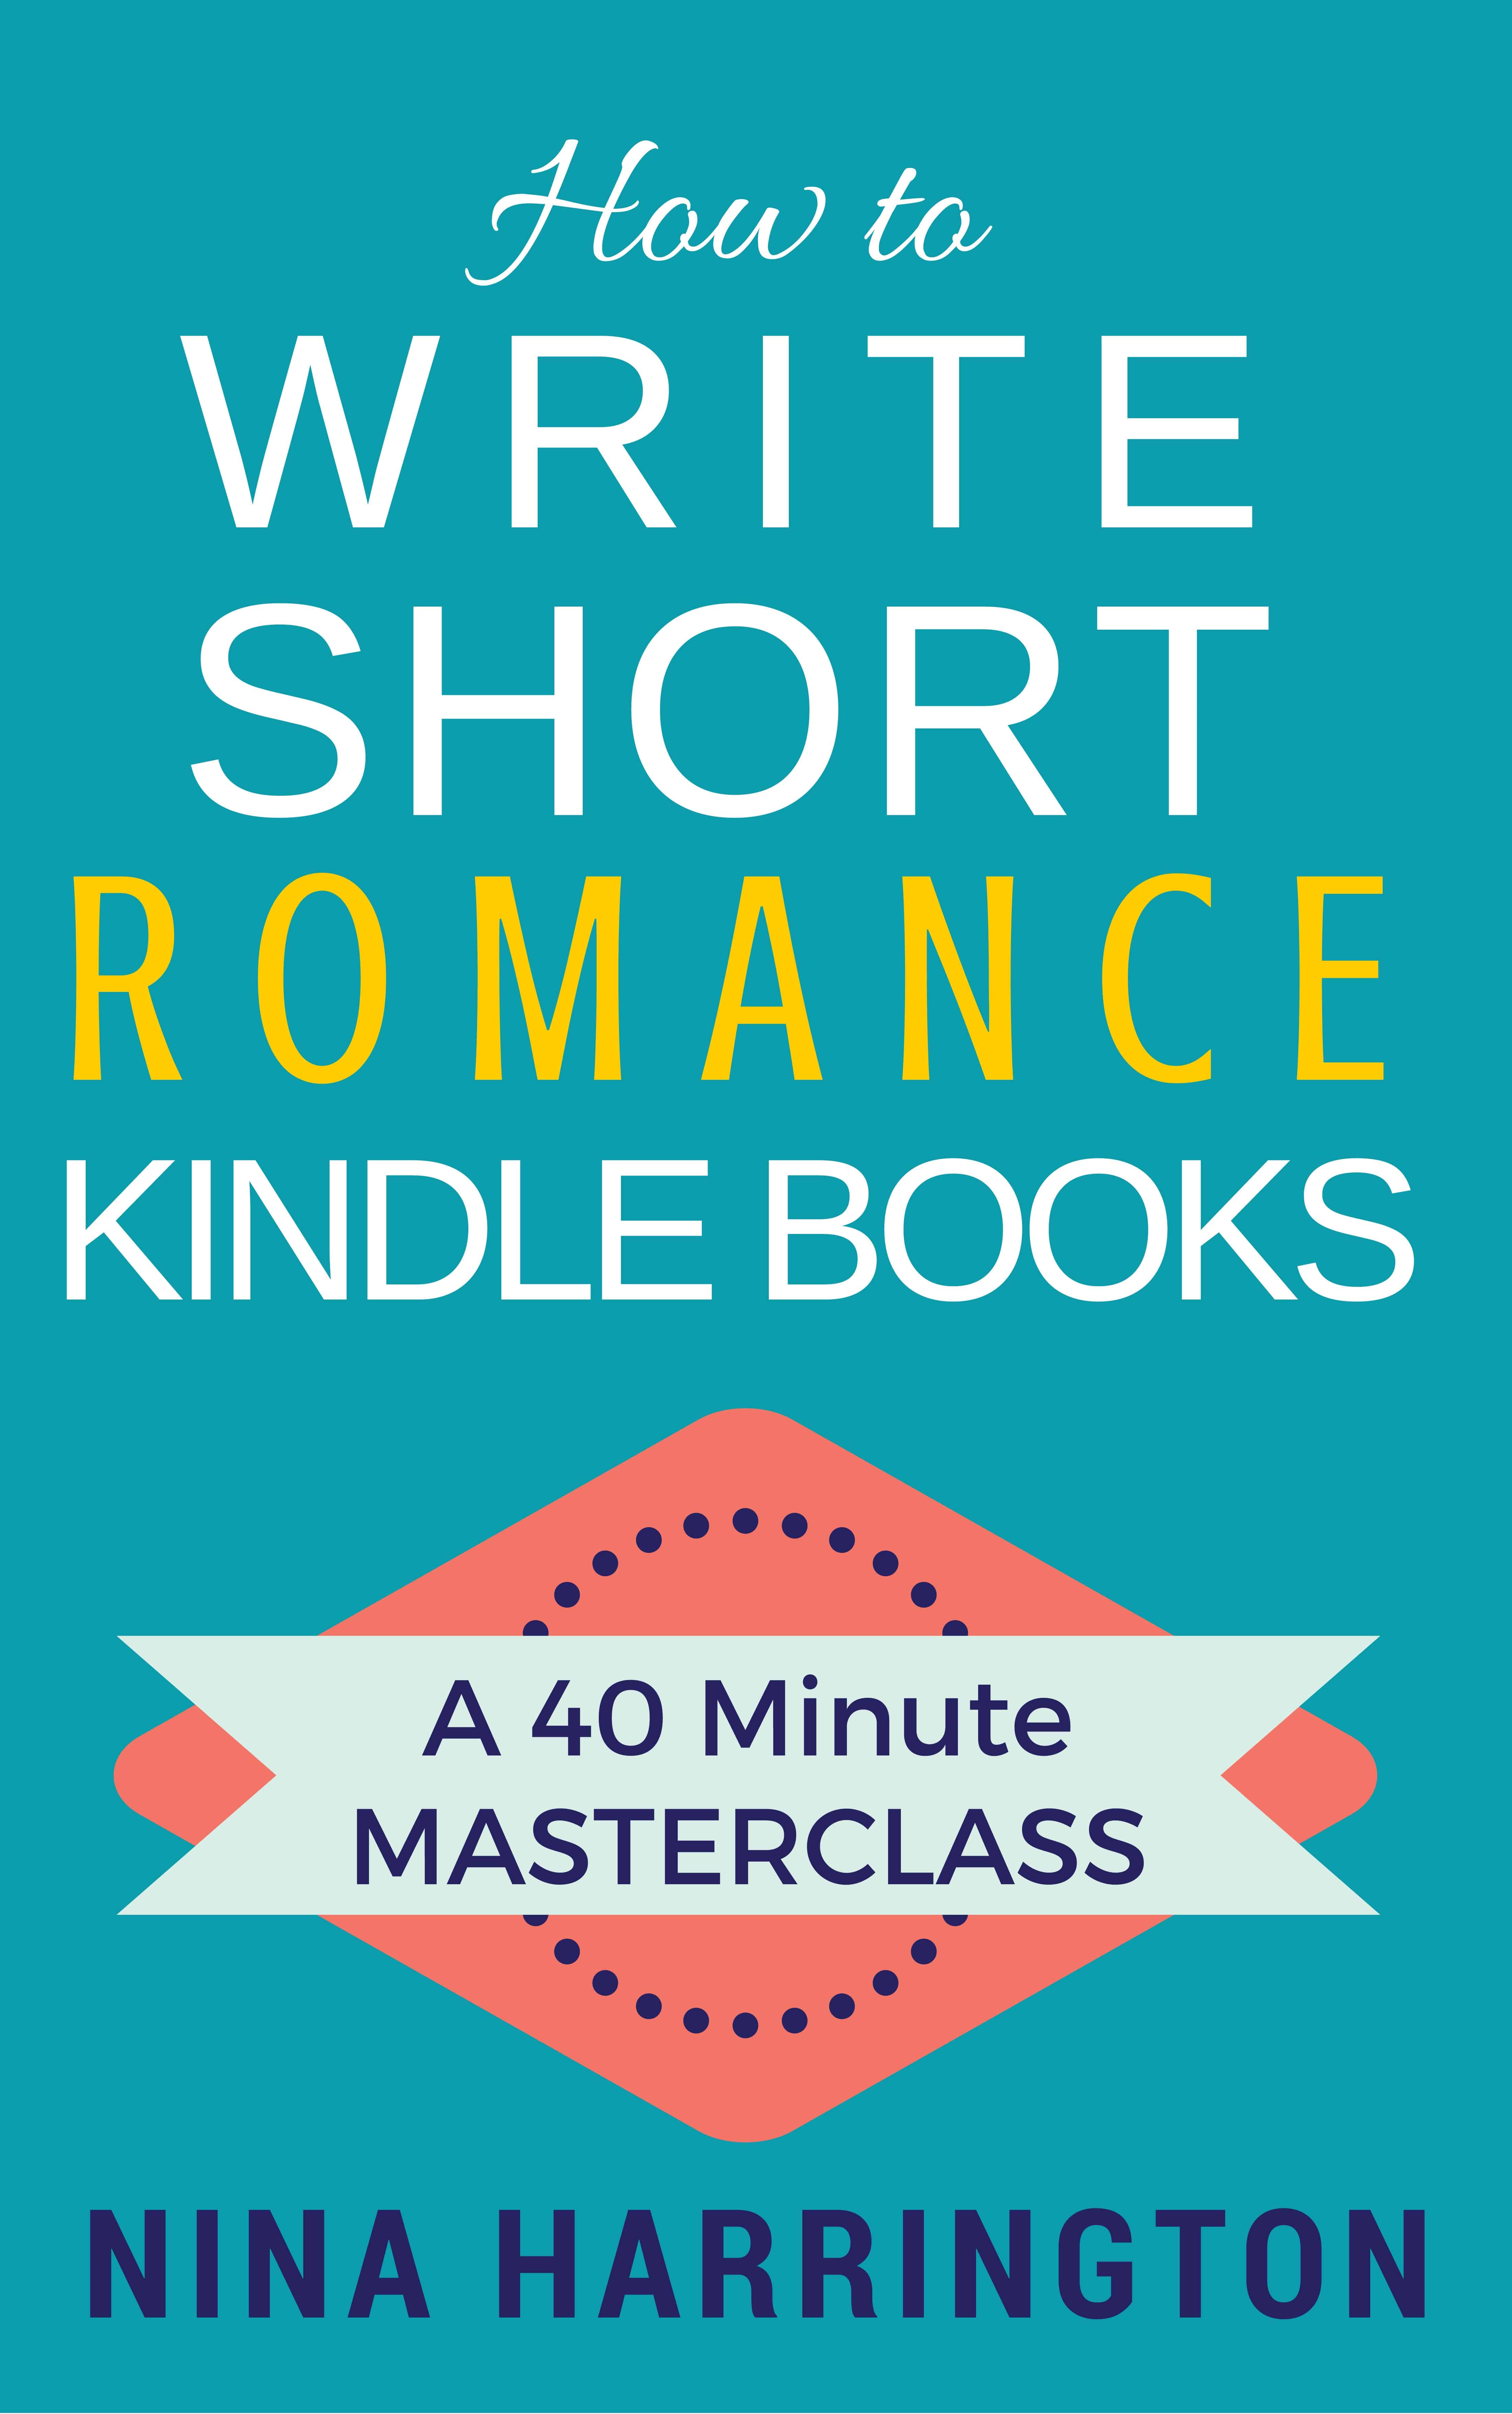 How to Write Short Romance Kindle Books